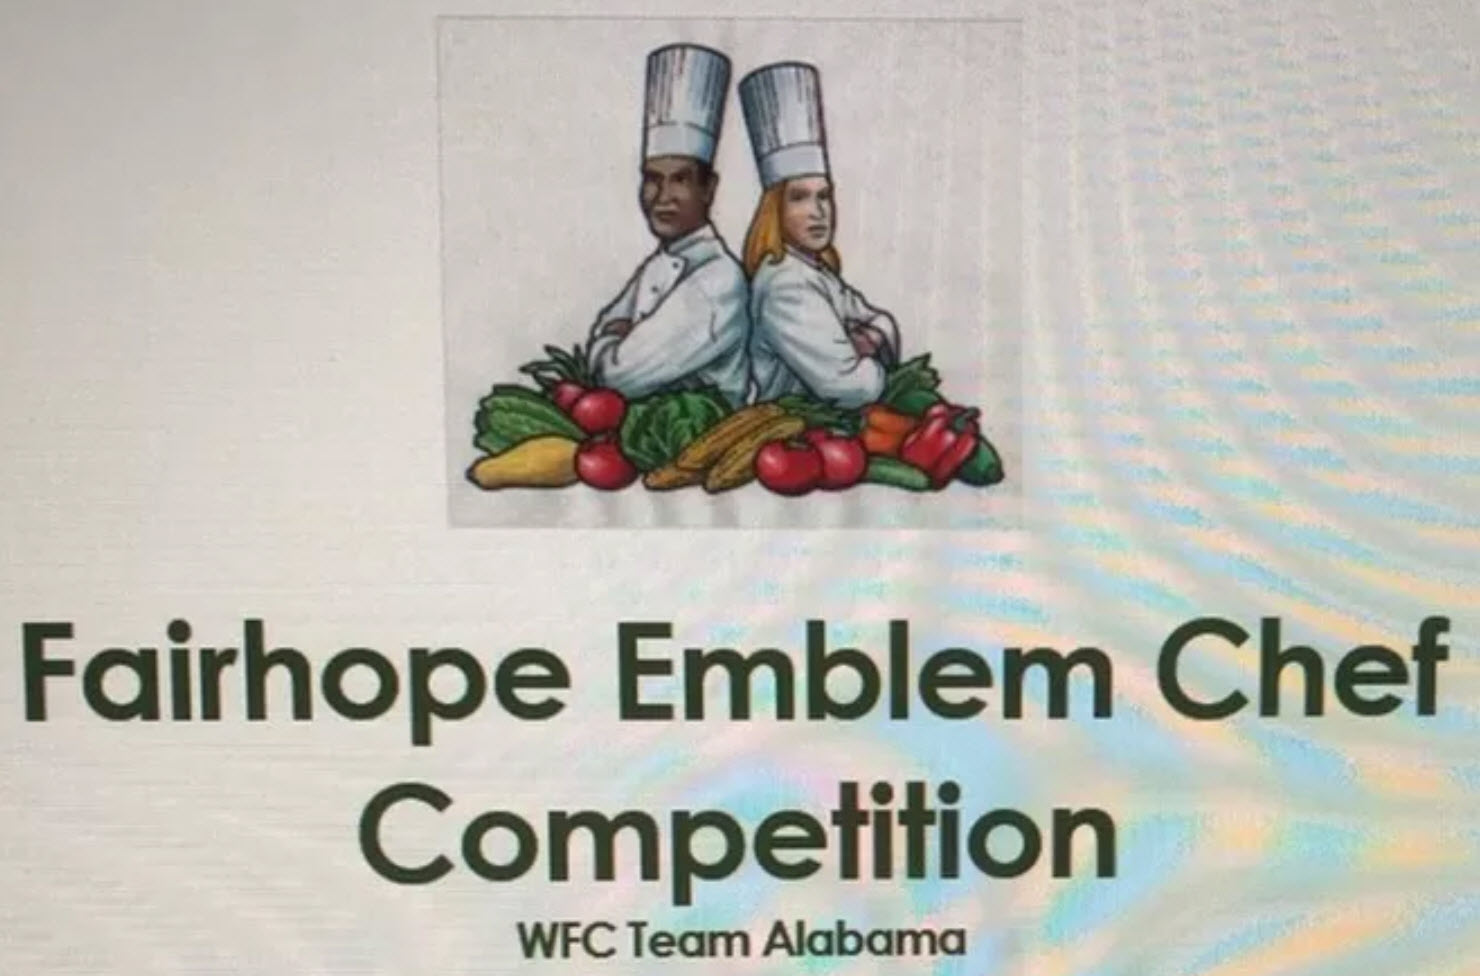 Fairhope Emblem’s Chef Competition image